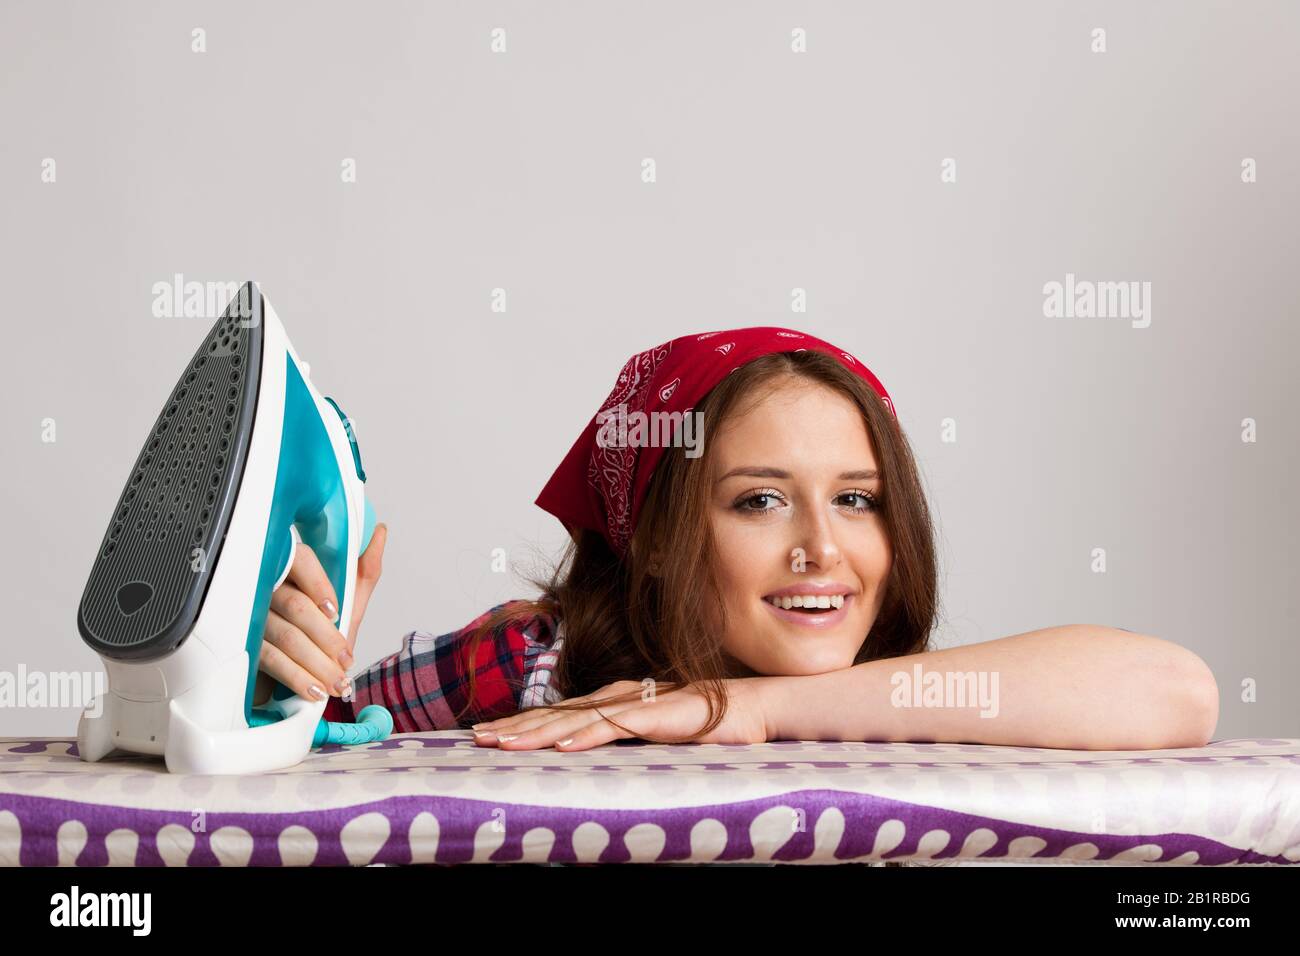 Happy woman ironing loundry isolated over white background Stock Photo